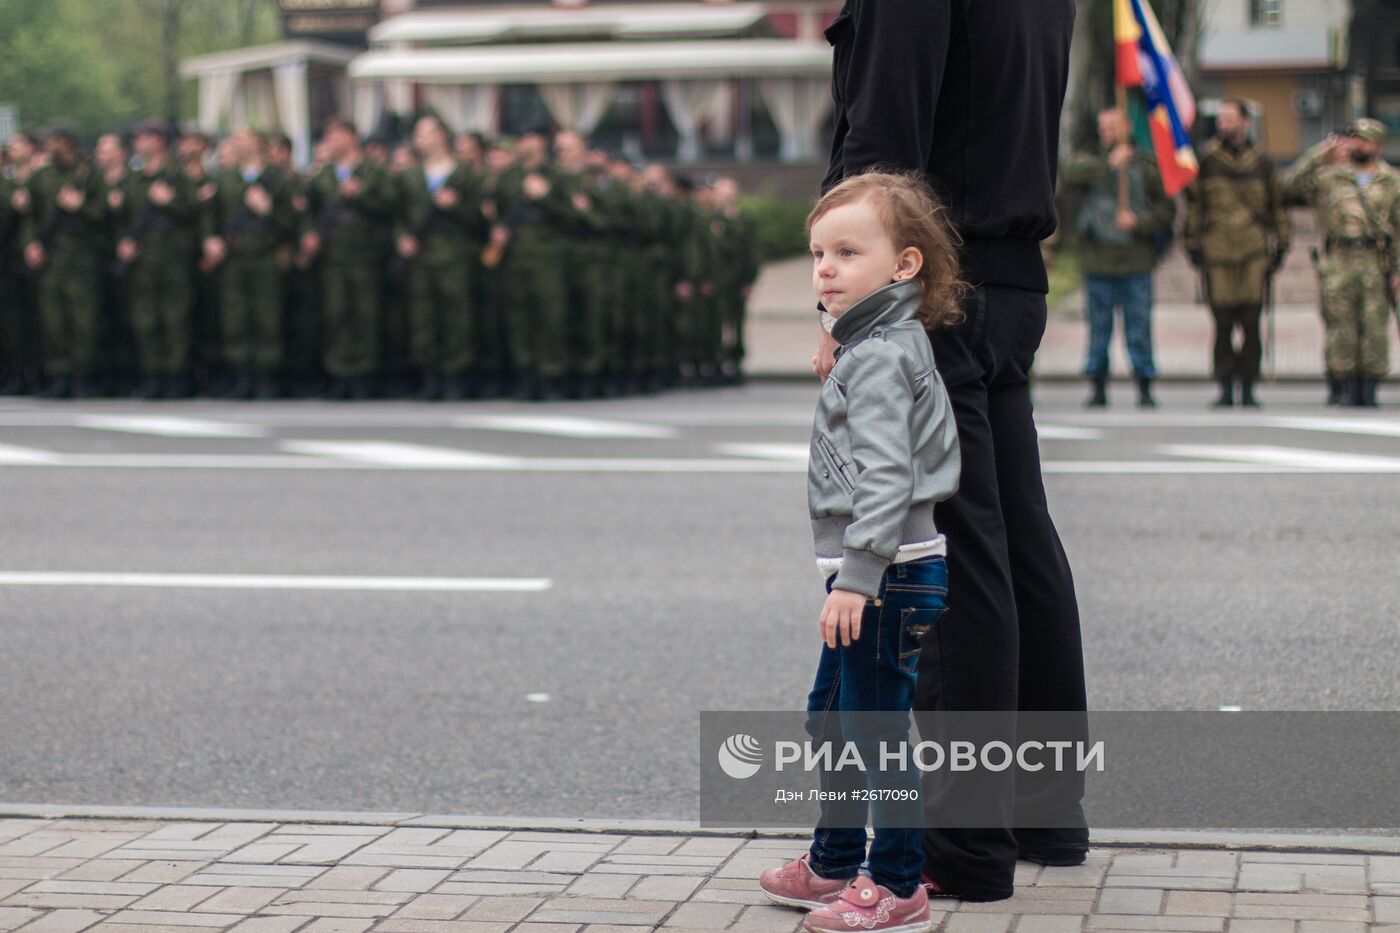 Репетиция Парада Победы в Донецке